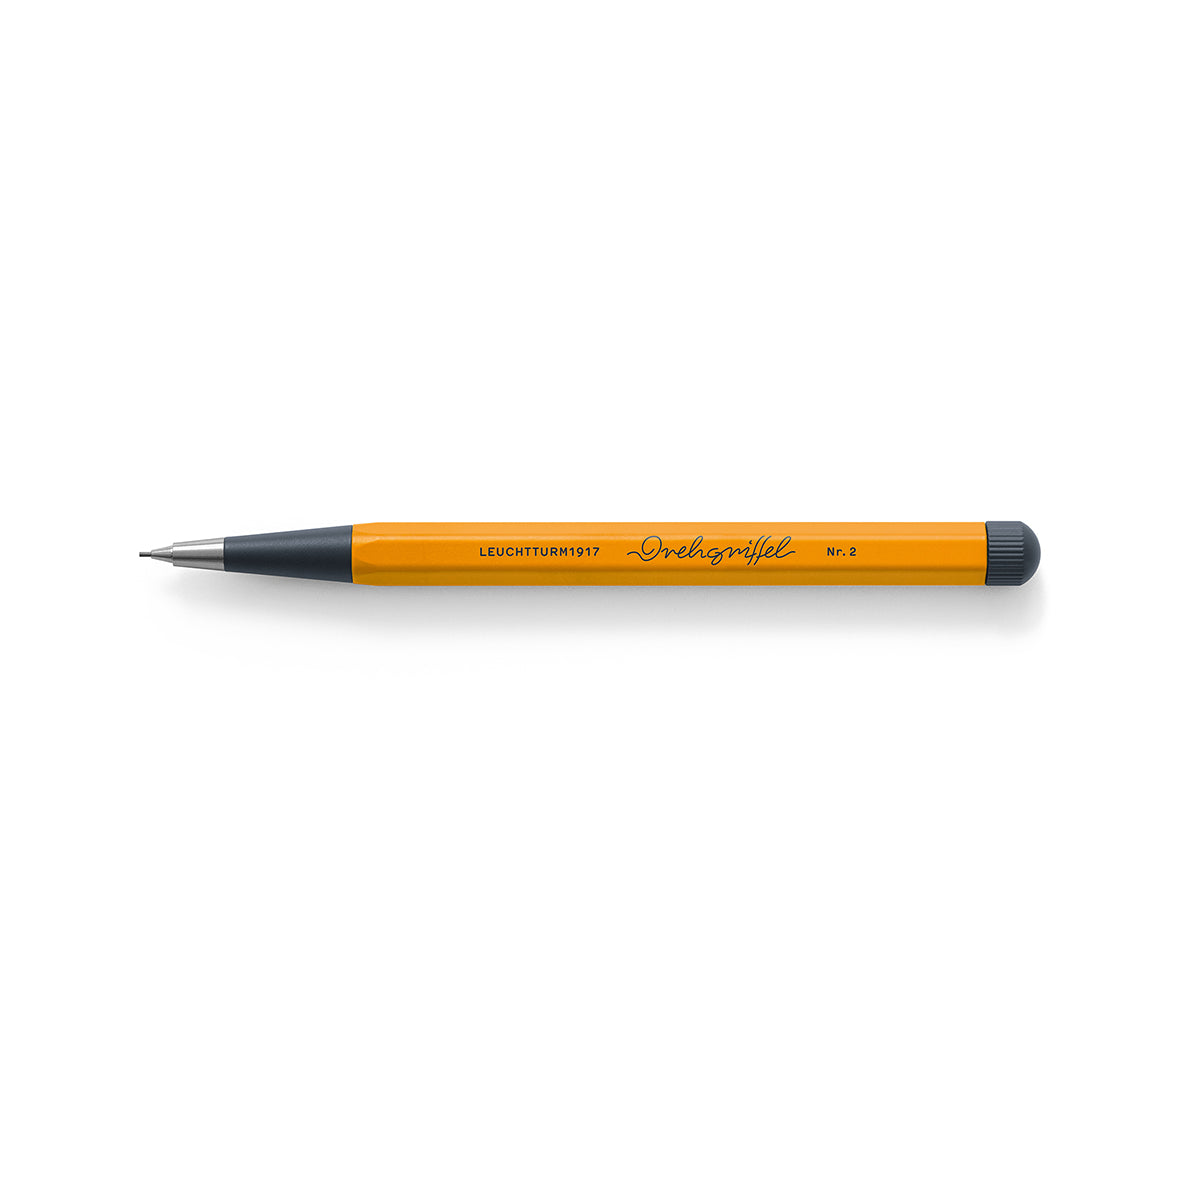 OCTÀGON DESIGN, Drehgriffel Pencil , black and orange color, black typography.